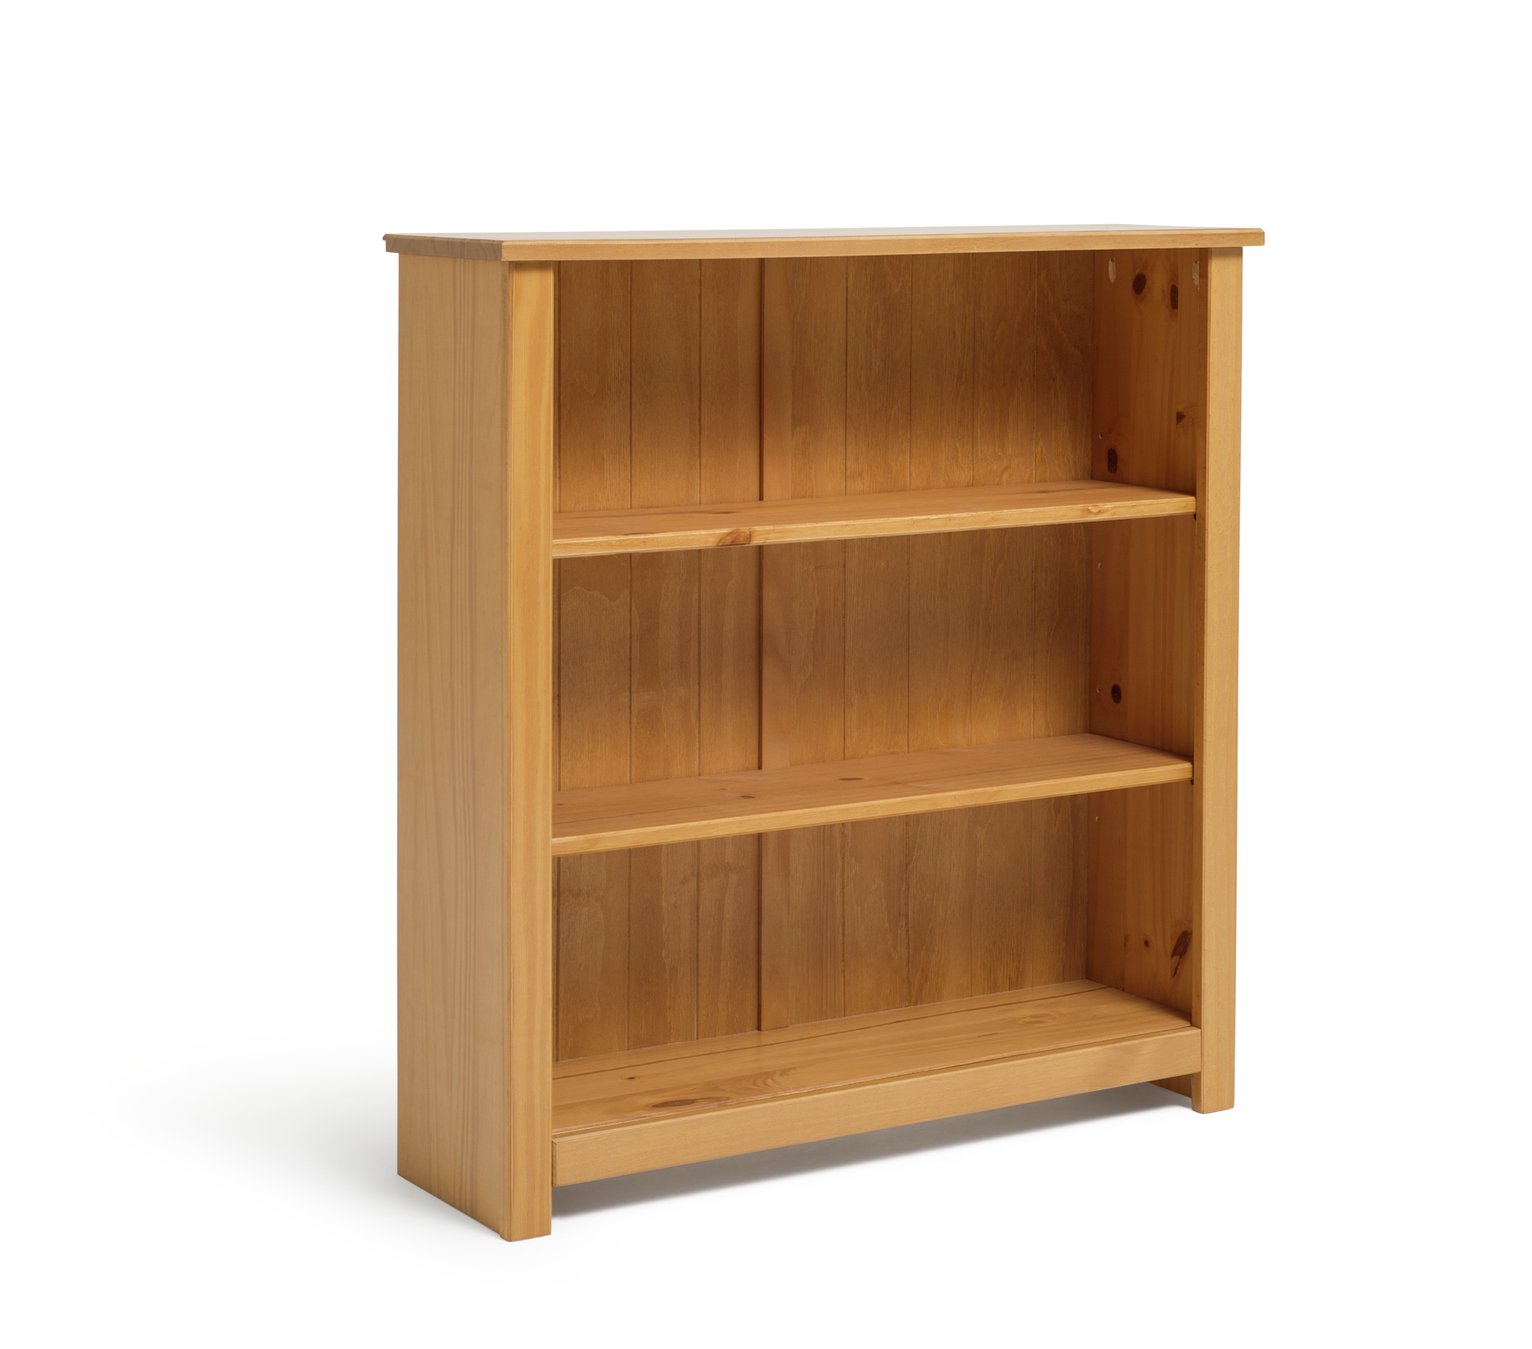 Argos Home Porto 2 Shelf Solid Wood Bookcase Review